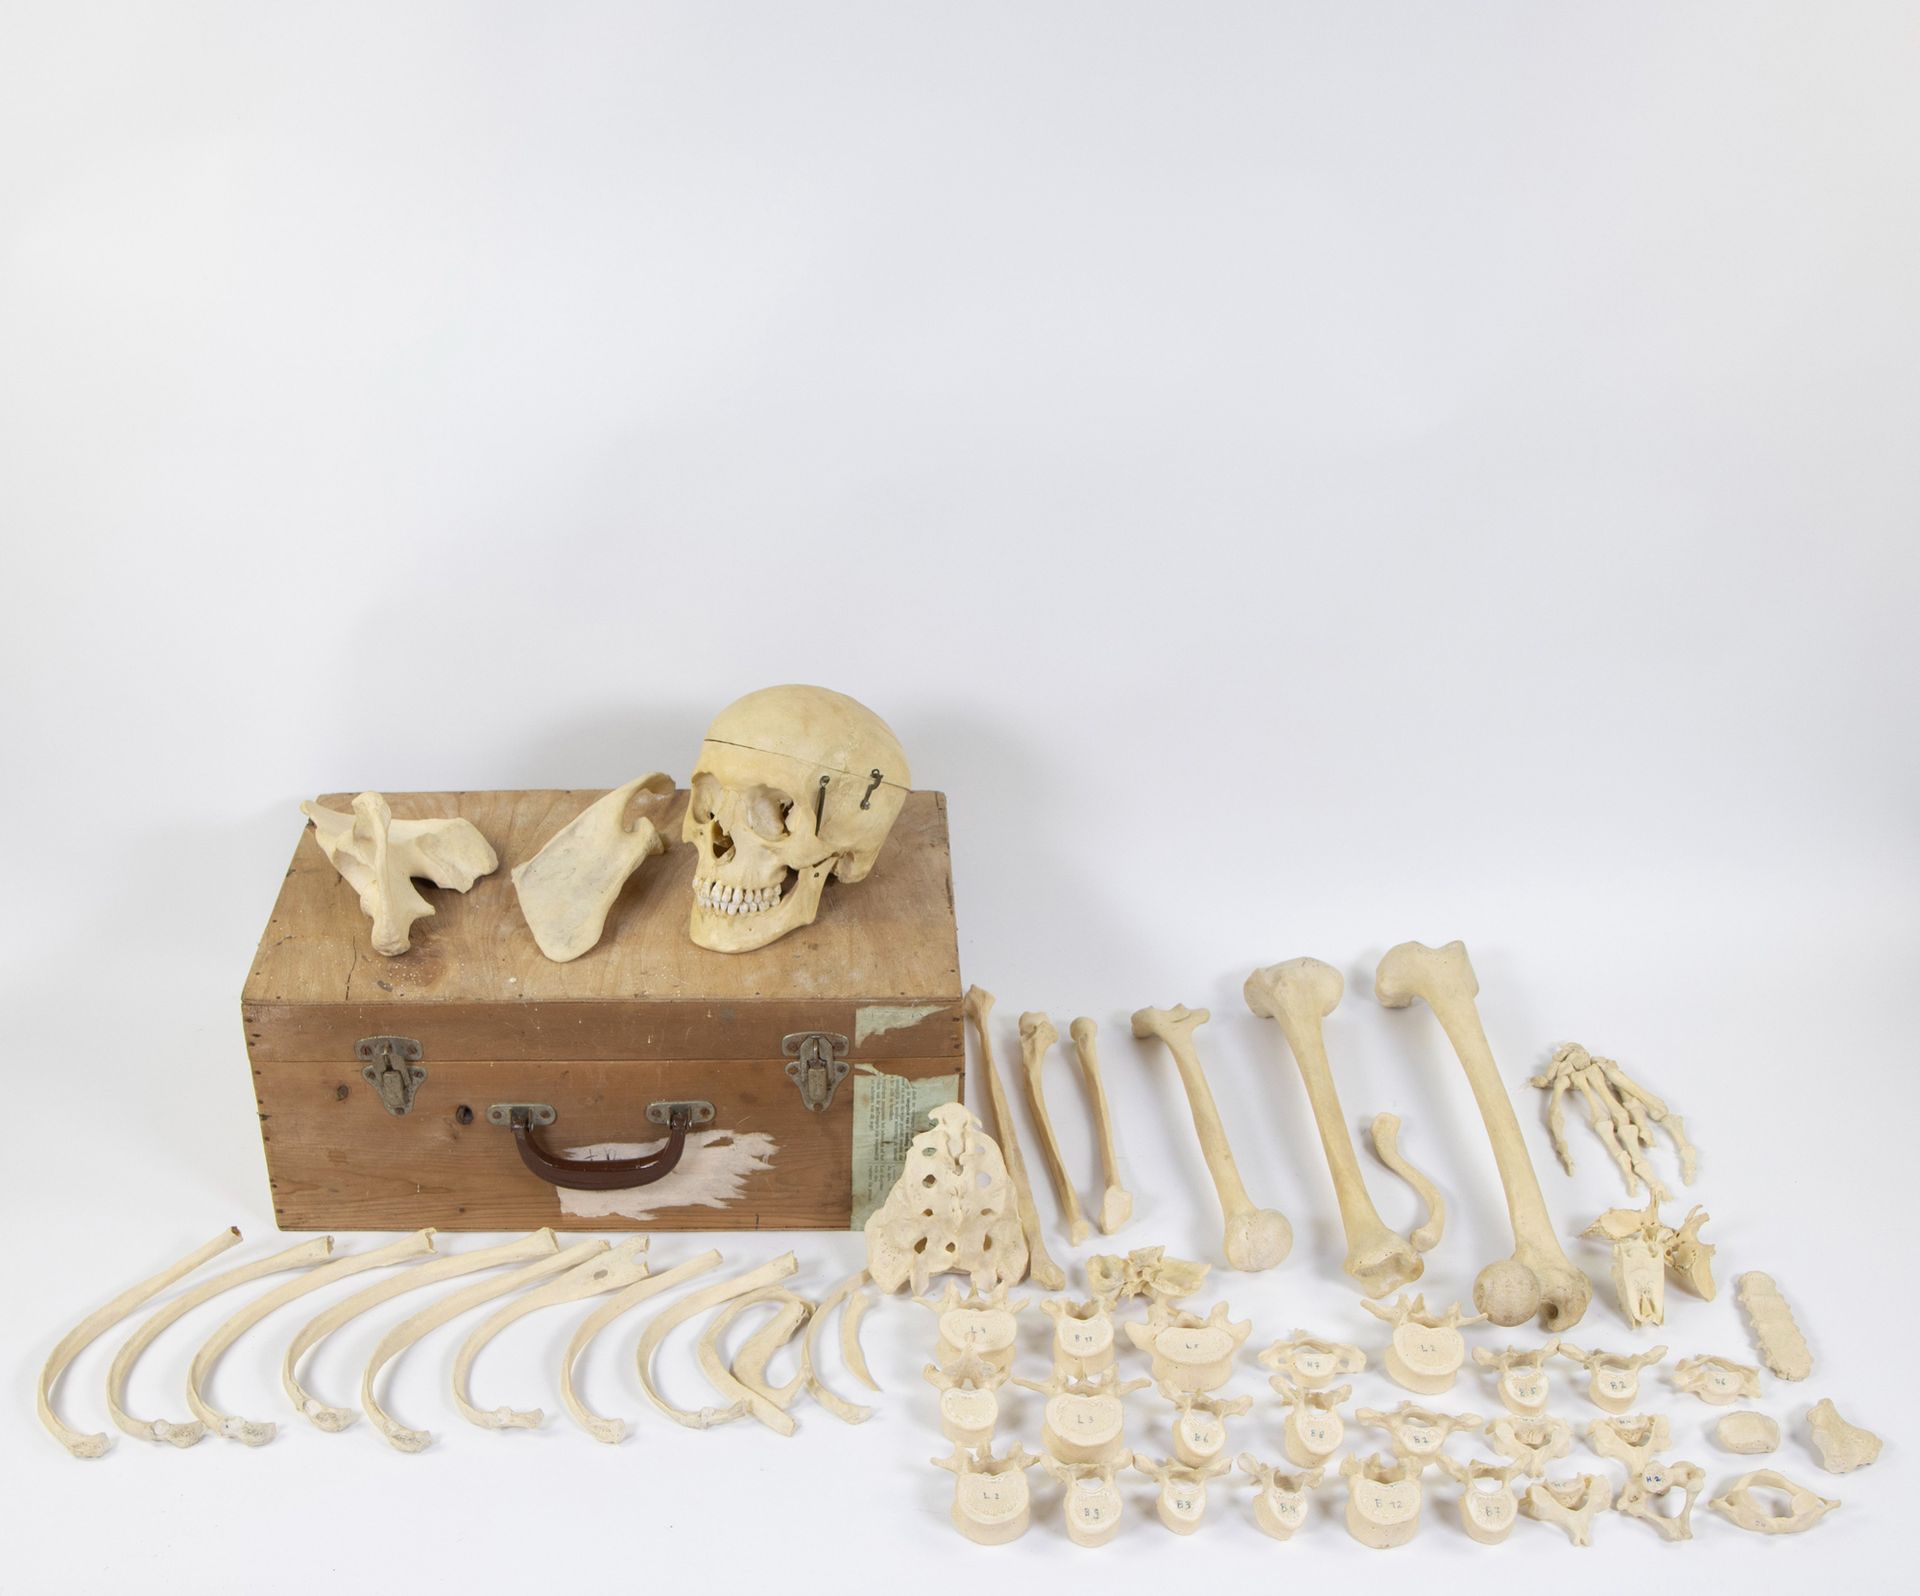 Null Teile eines Skeletts in Holzkiste, Studienobjekt.
Delen van een skelet in h&hellip;